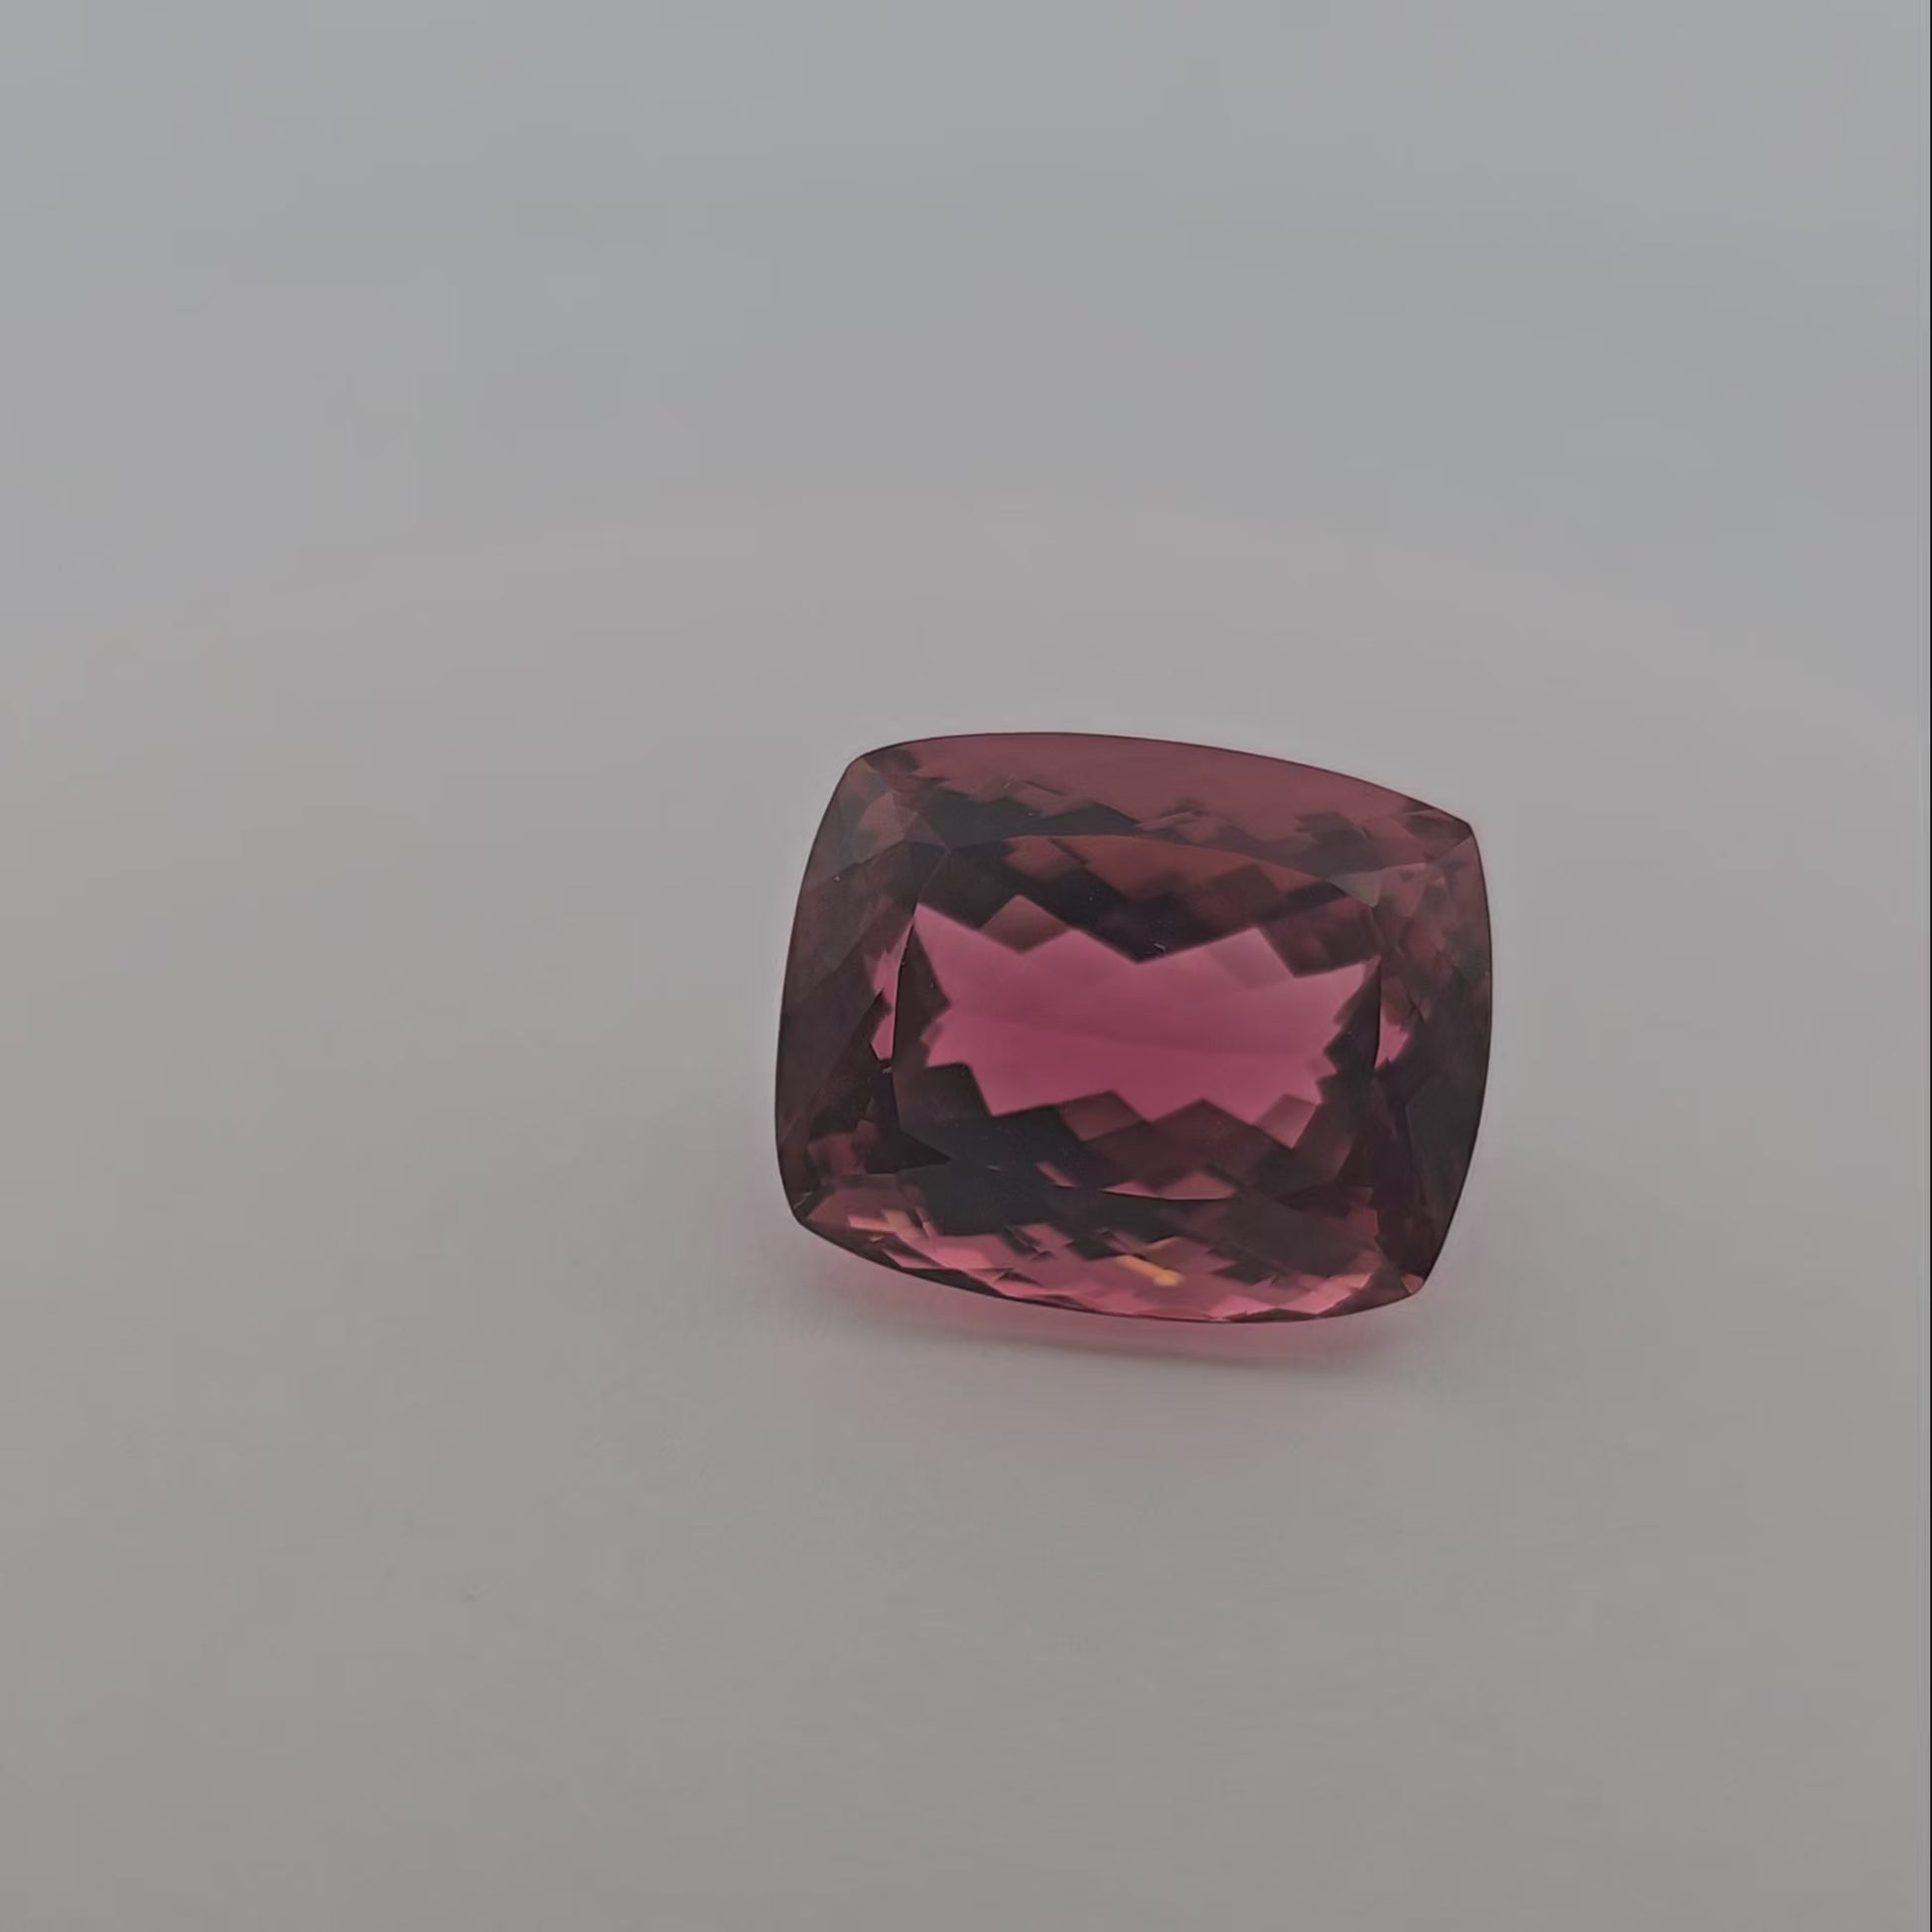 loose Natural Pink Tourmaline Stone 29.09 Carats Cushion Cut (19.3 x 15.7 mm